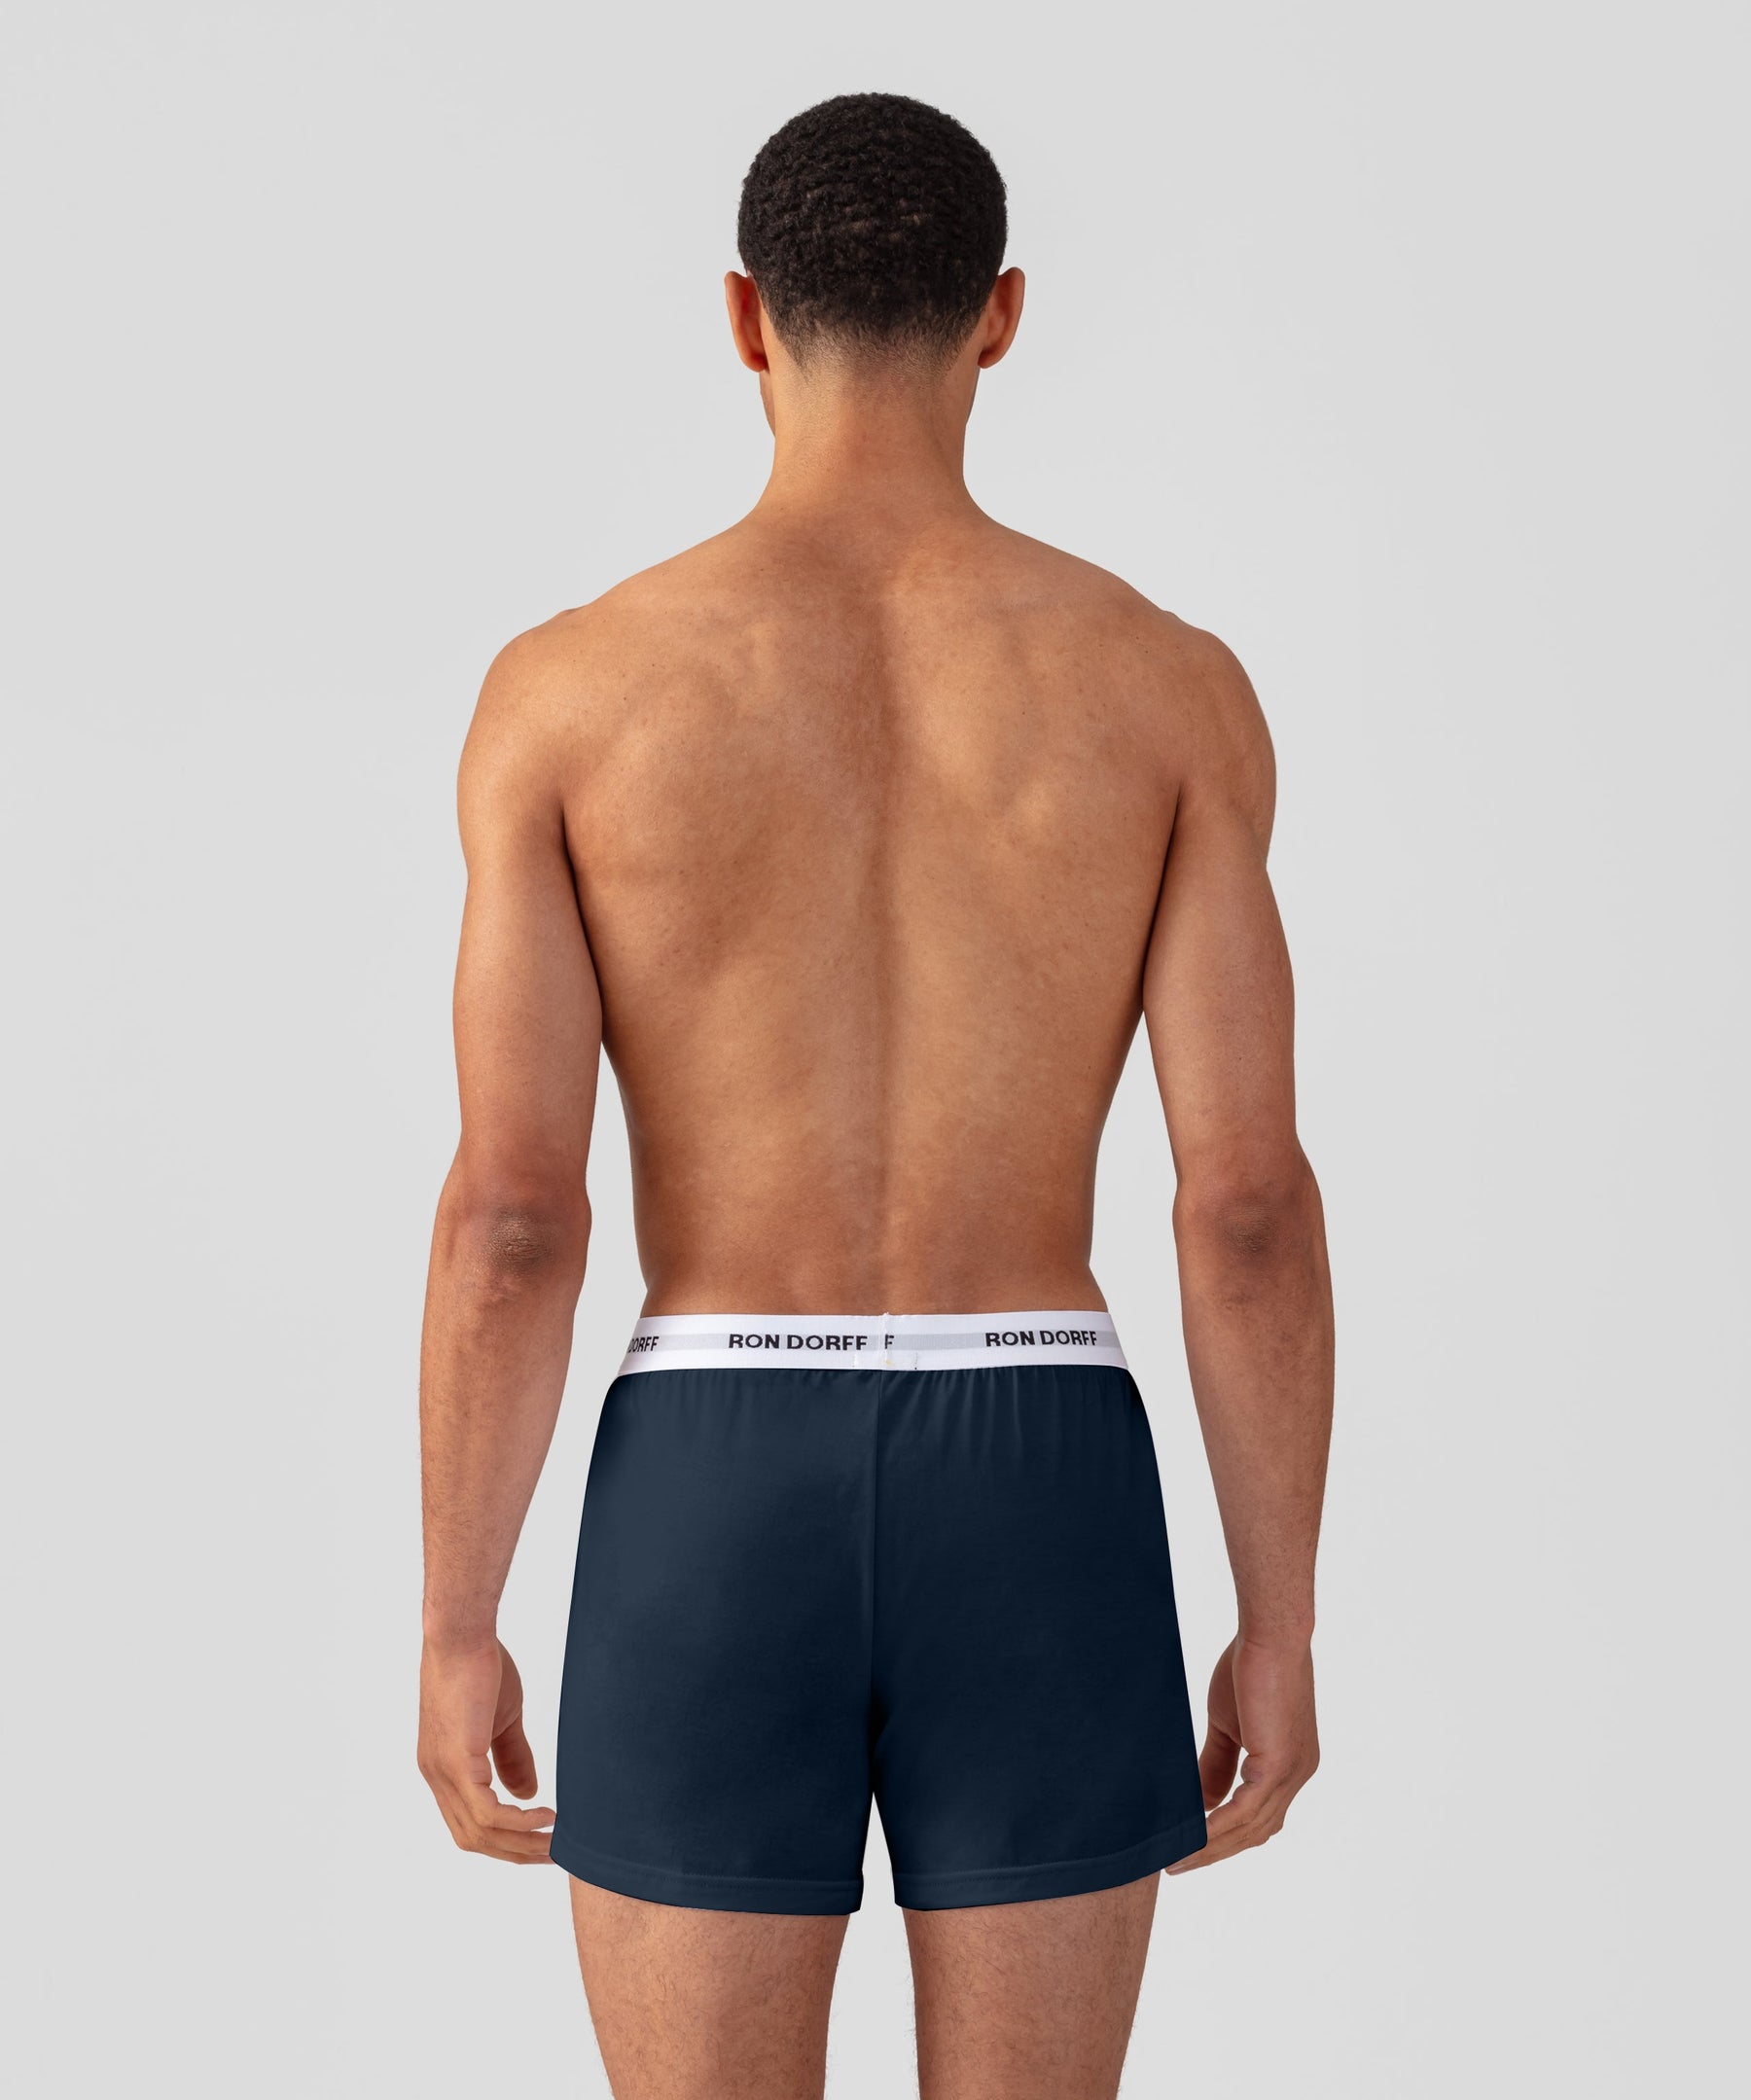 RON DORFF Pyjama Shorts: Navy